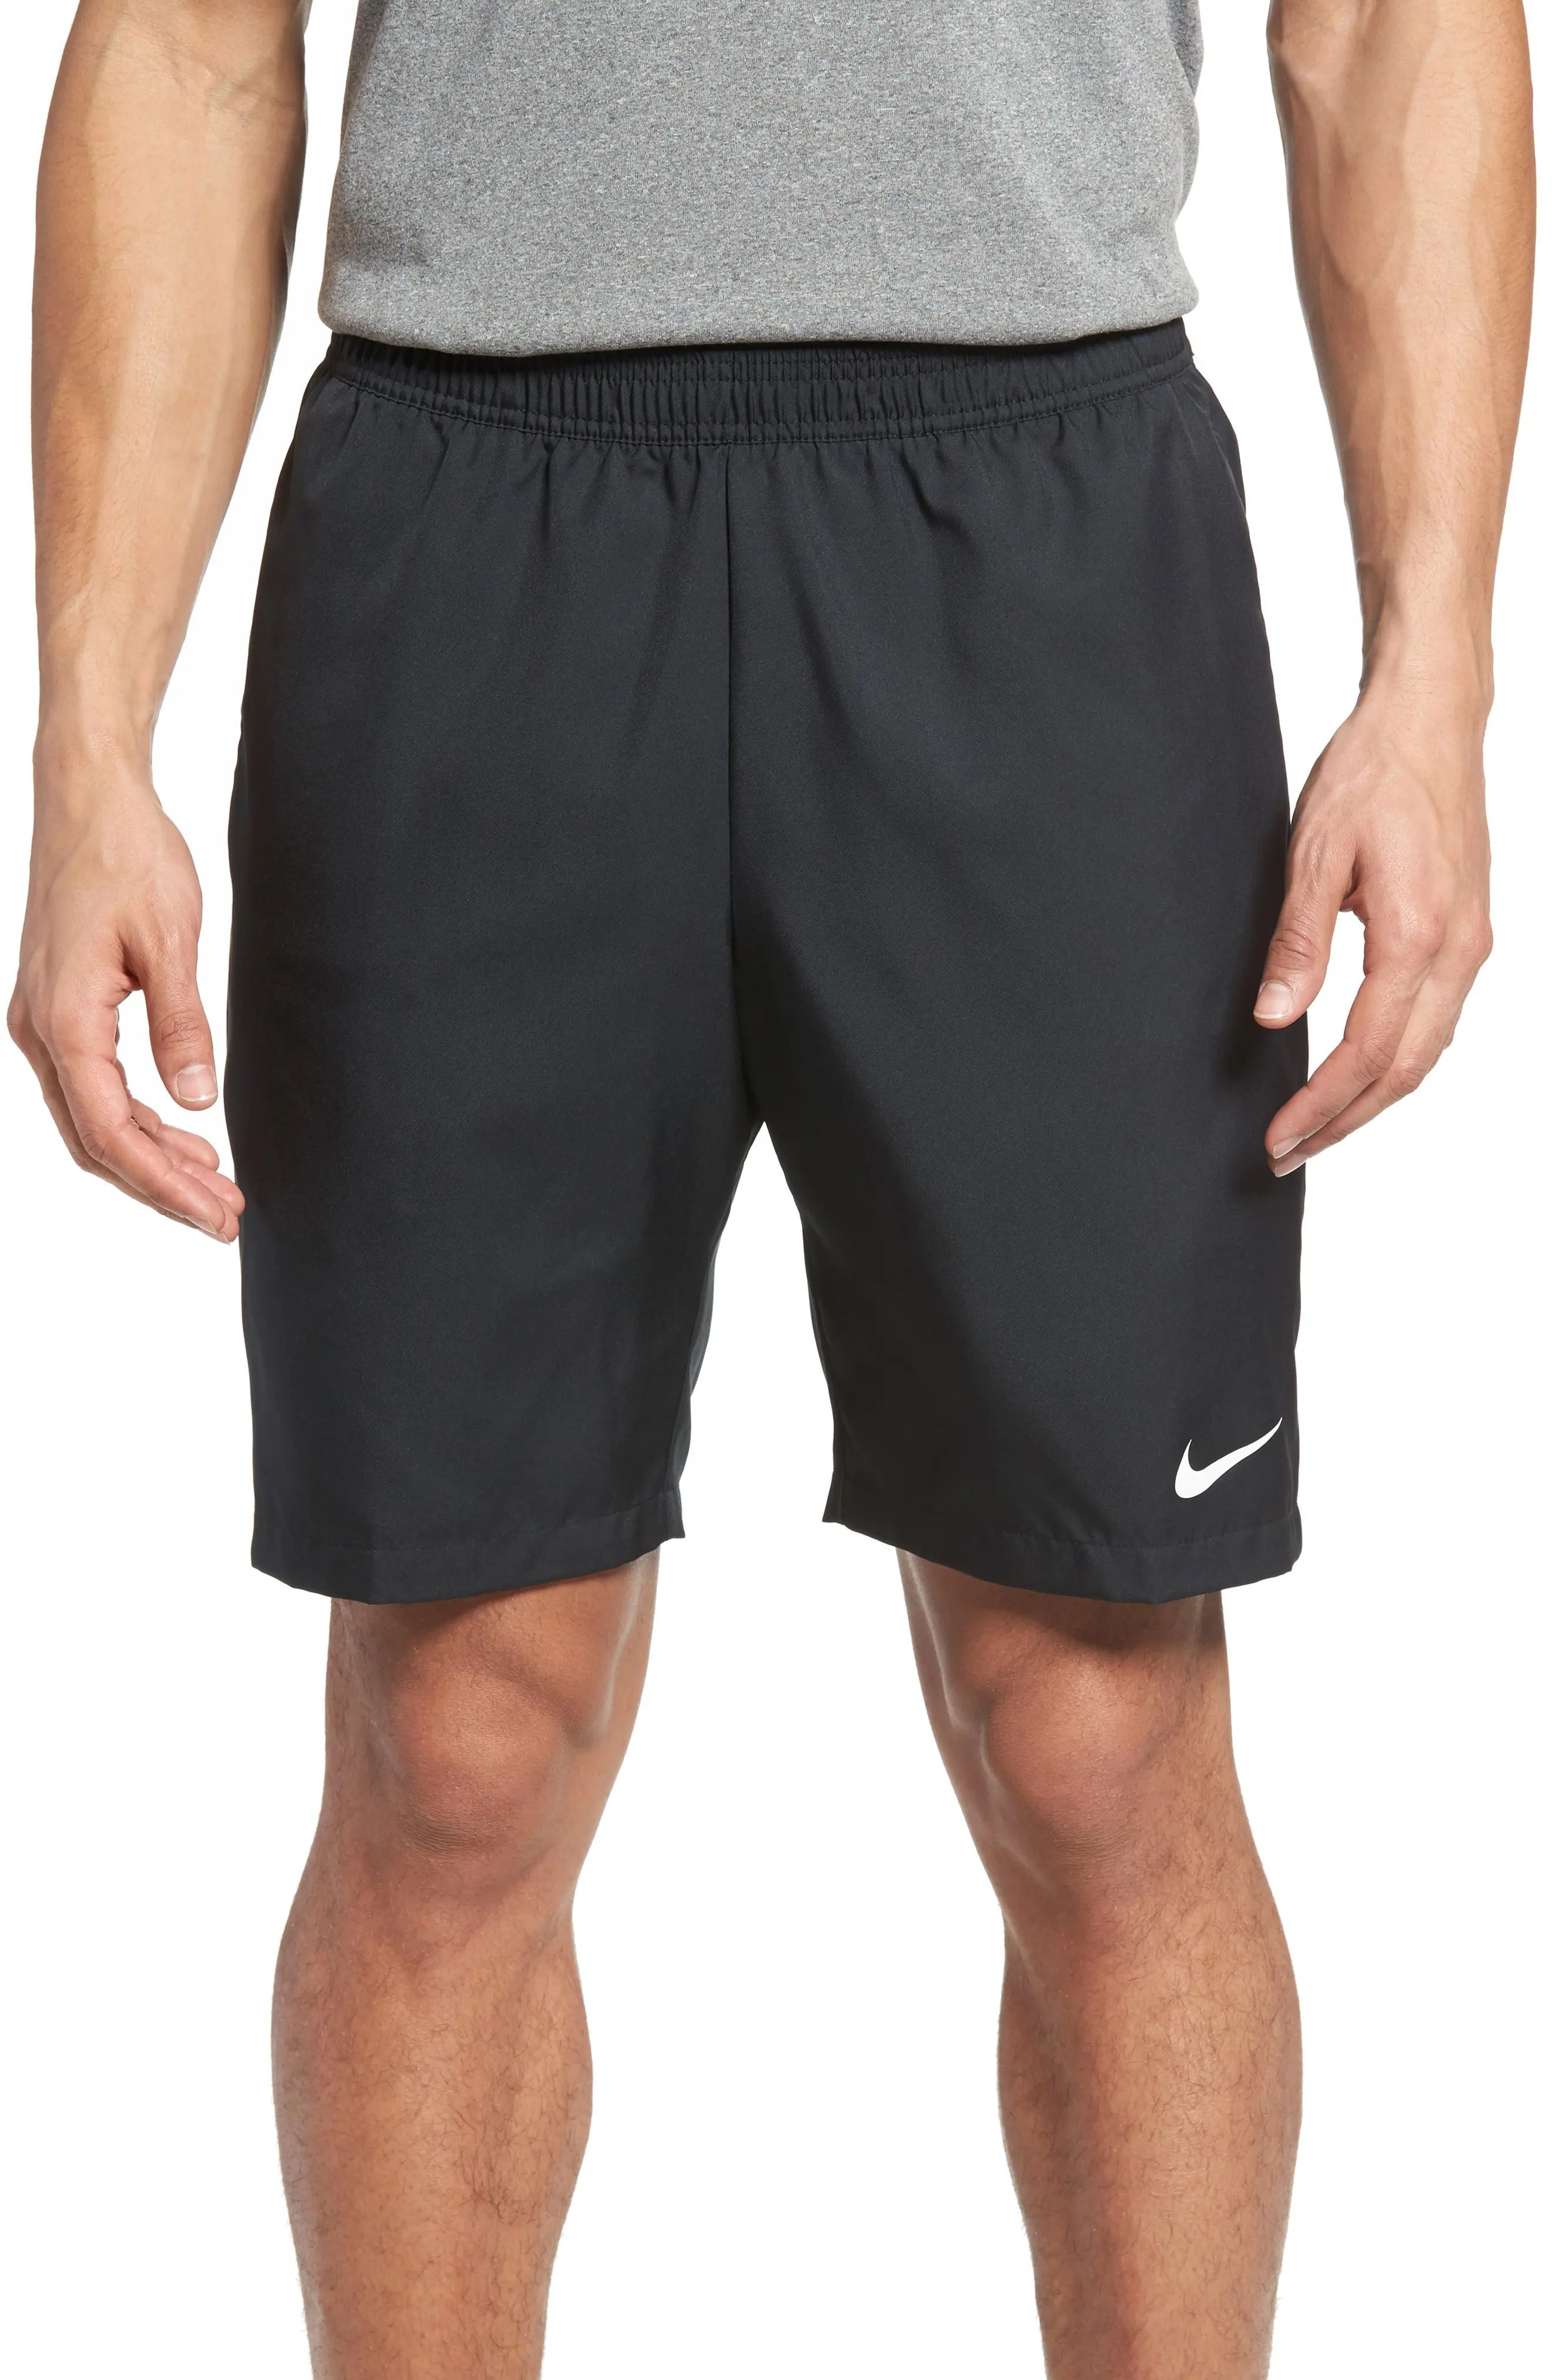 Tennis Shorts | Nordstrom